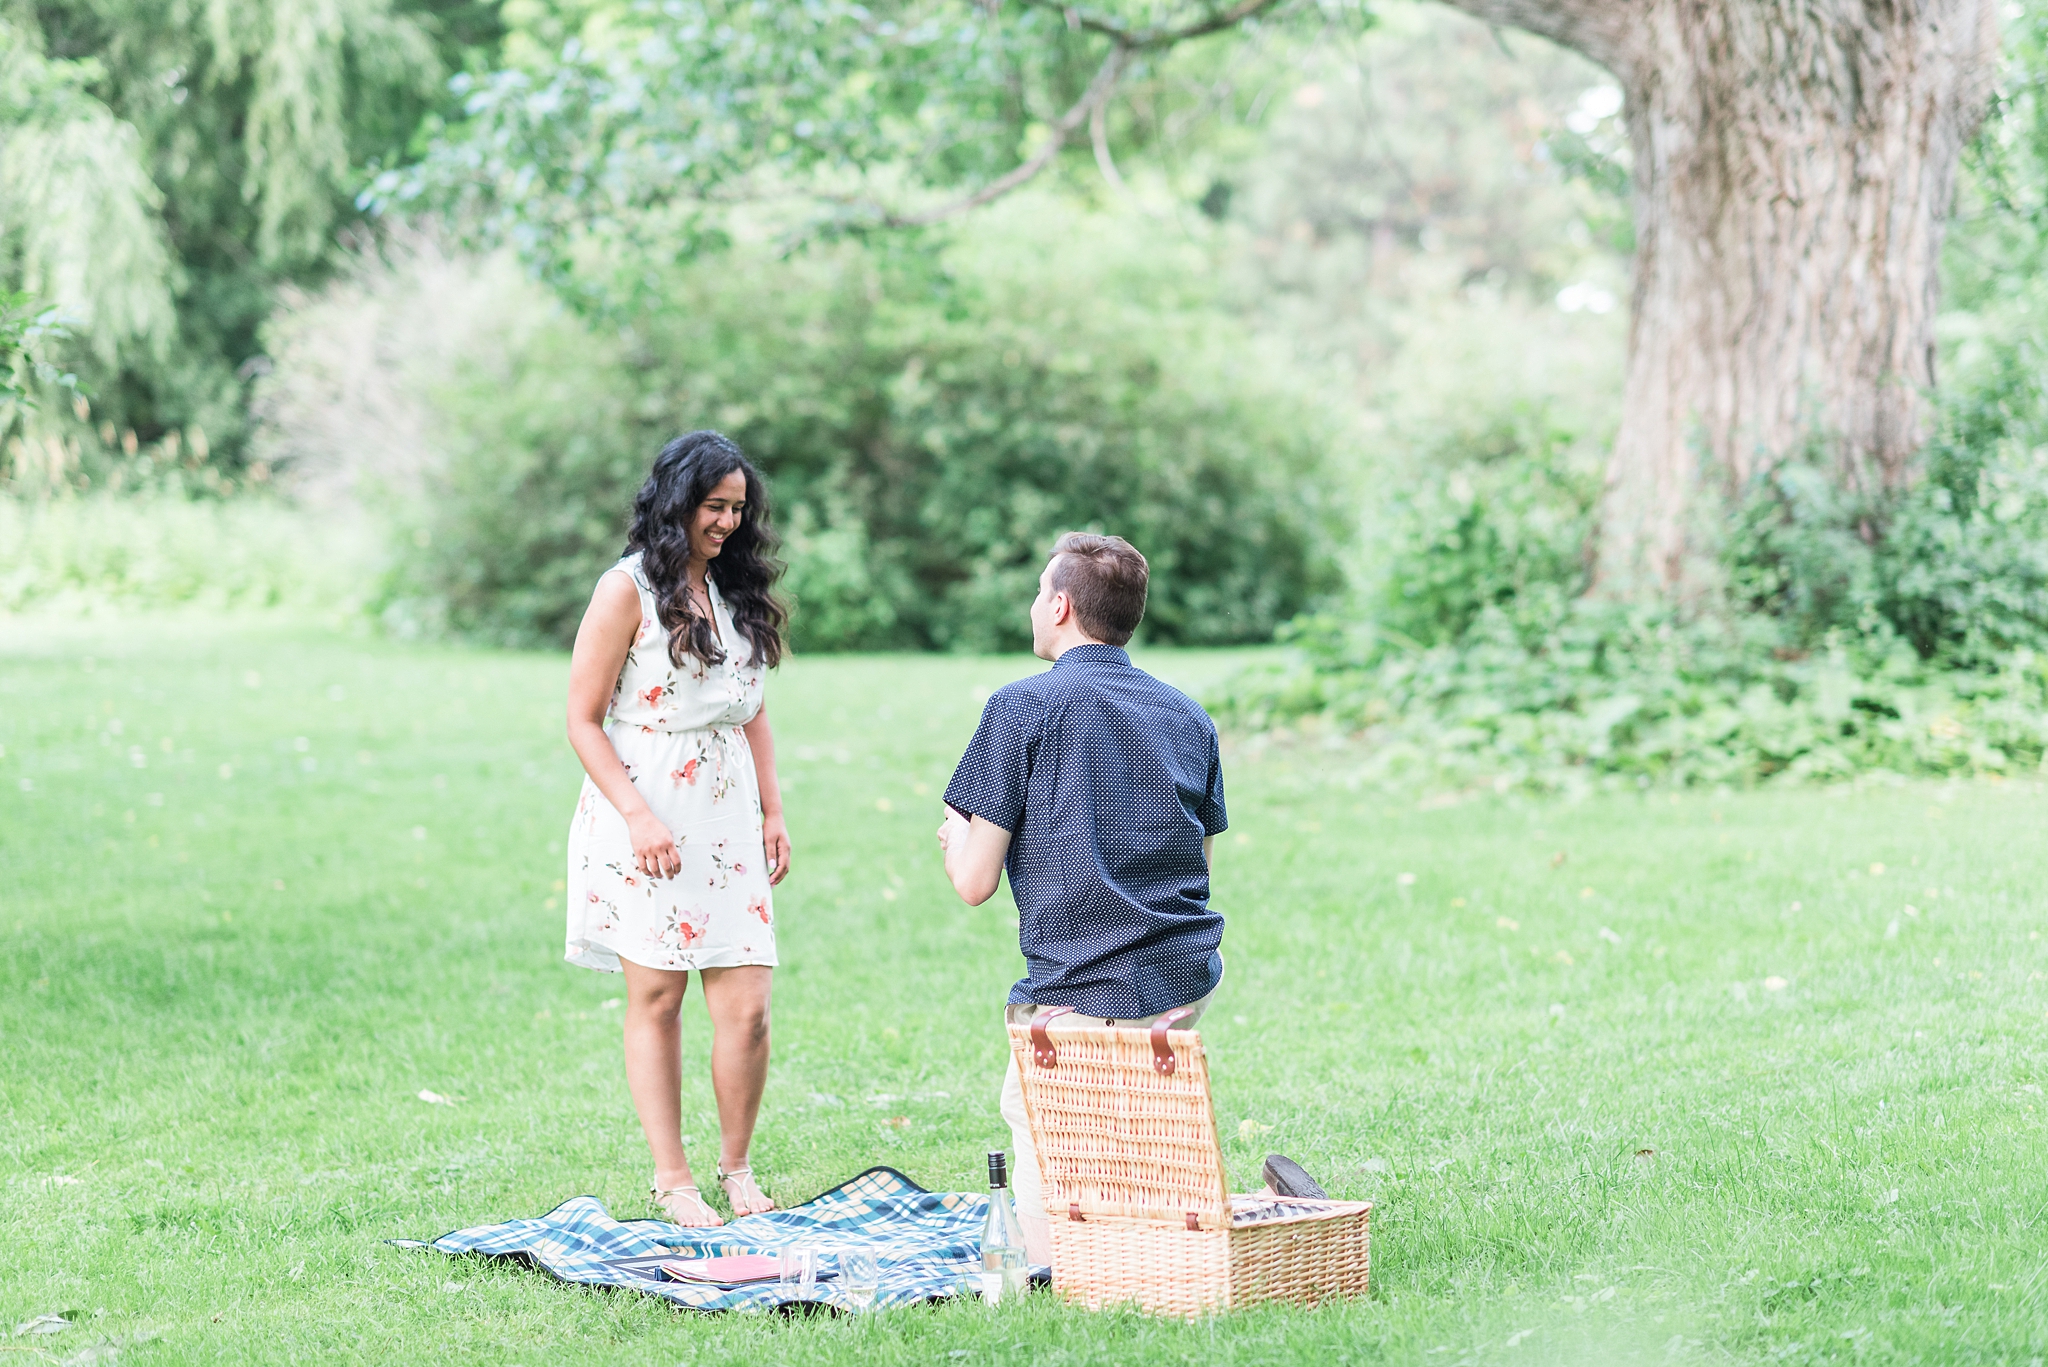 Dominion arboretum summer picnic proposal | ottawa proposal photography | proposal photography at the central experimental farm arboretum #ottawawedding #ottawaproposal #weddingphotography